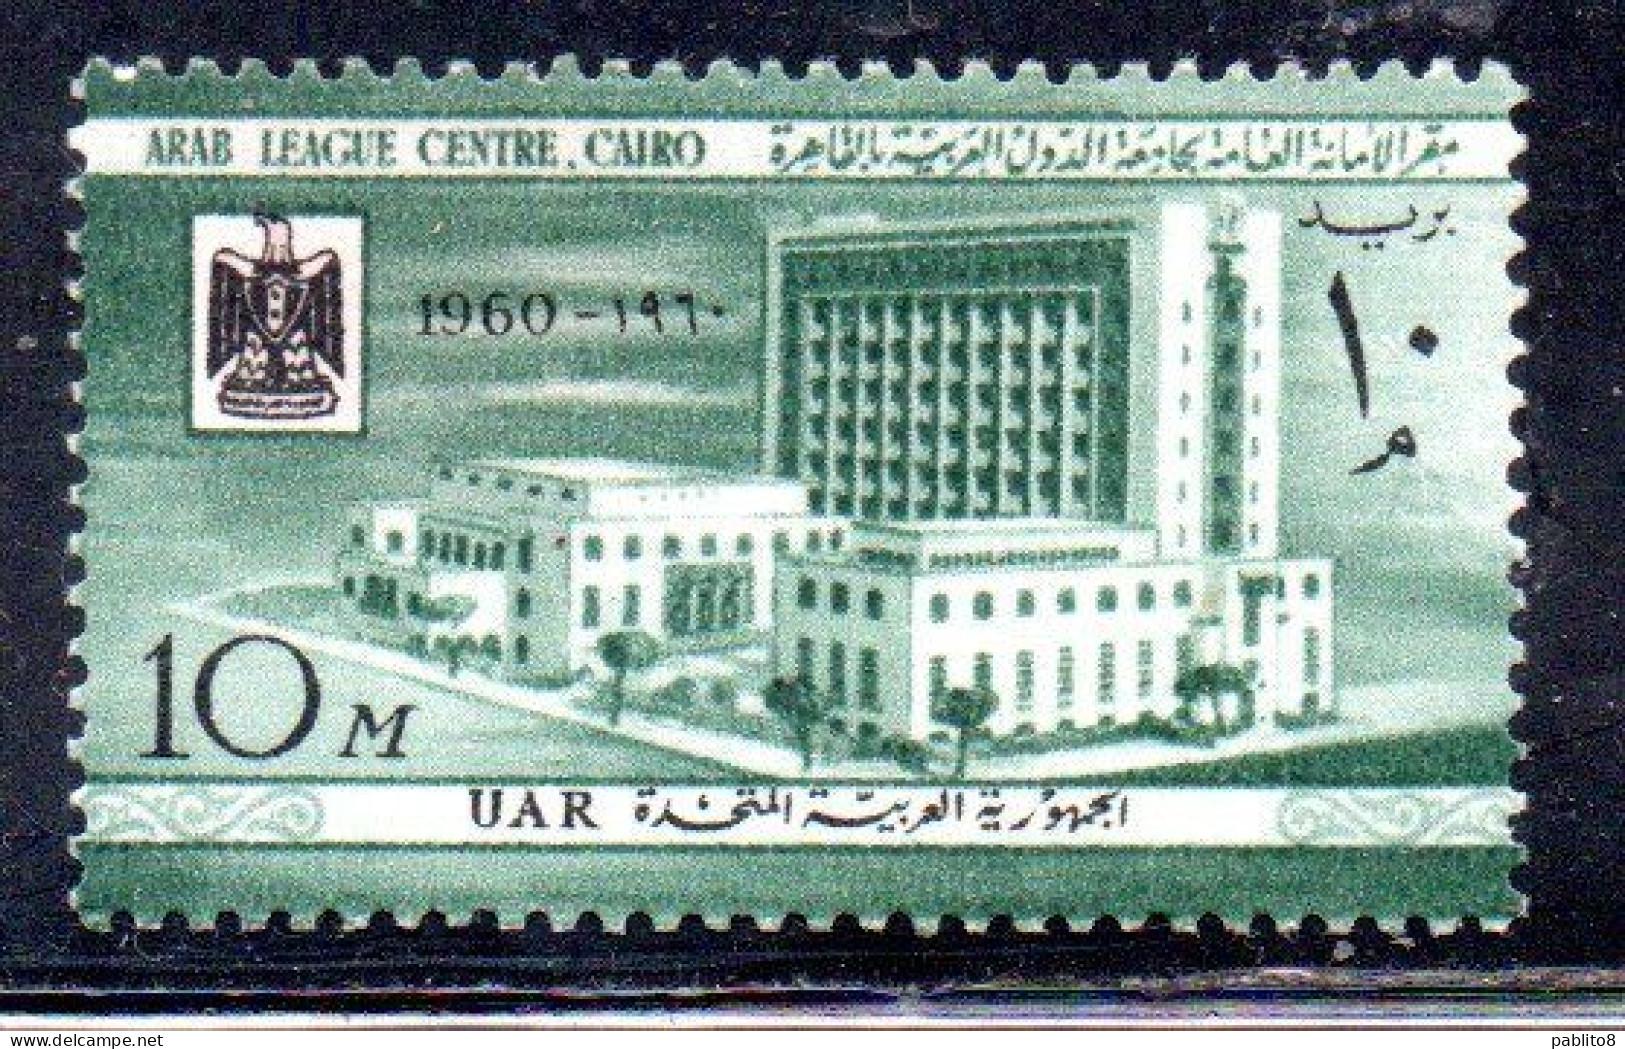 UAR EGYPT EGITTO 1960 OPEN ARAB LEAGUE CENTER AND POSTAL MUSEUM CAIRO 10m MH - Neufs